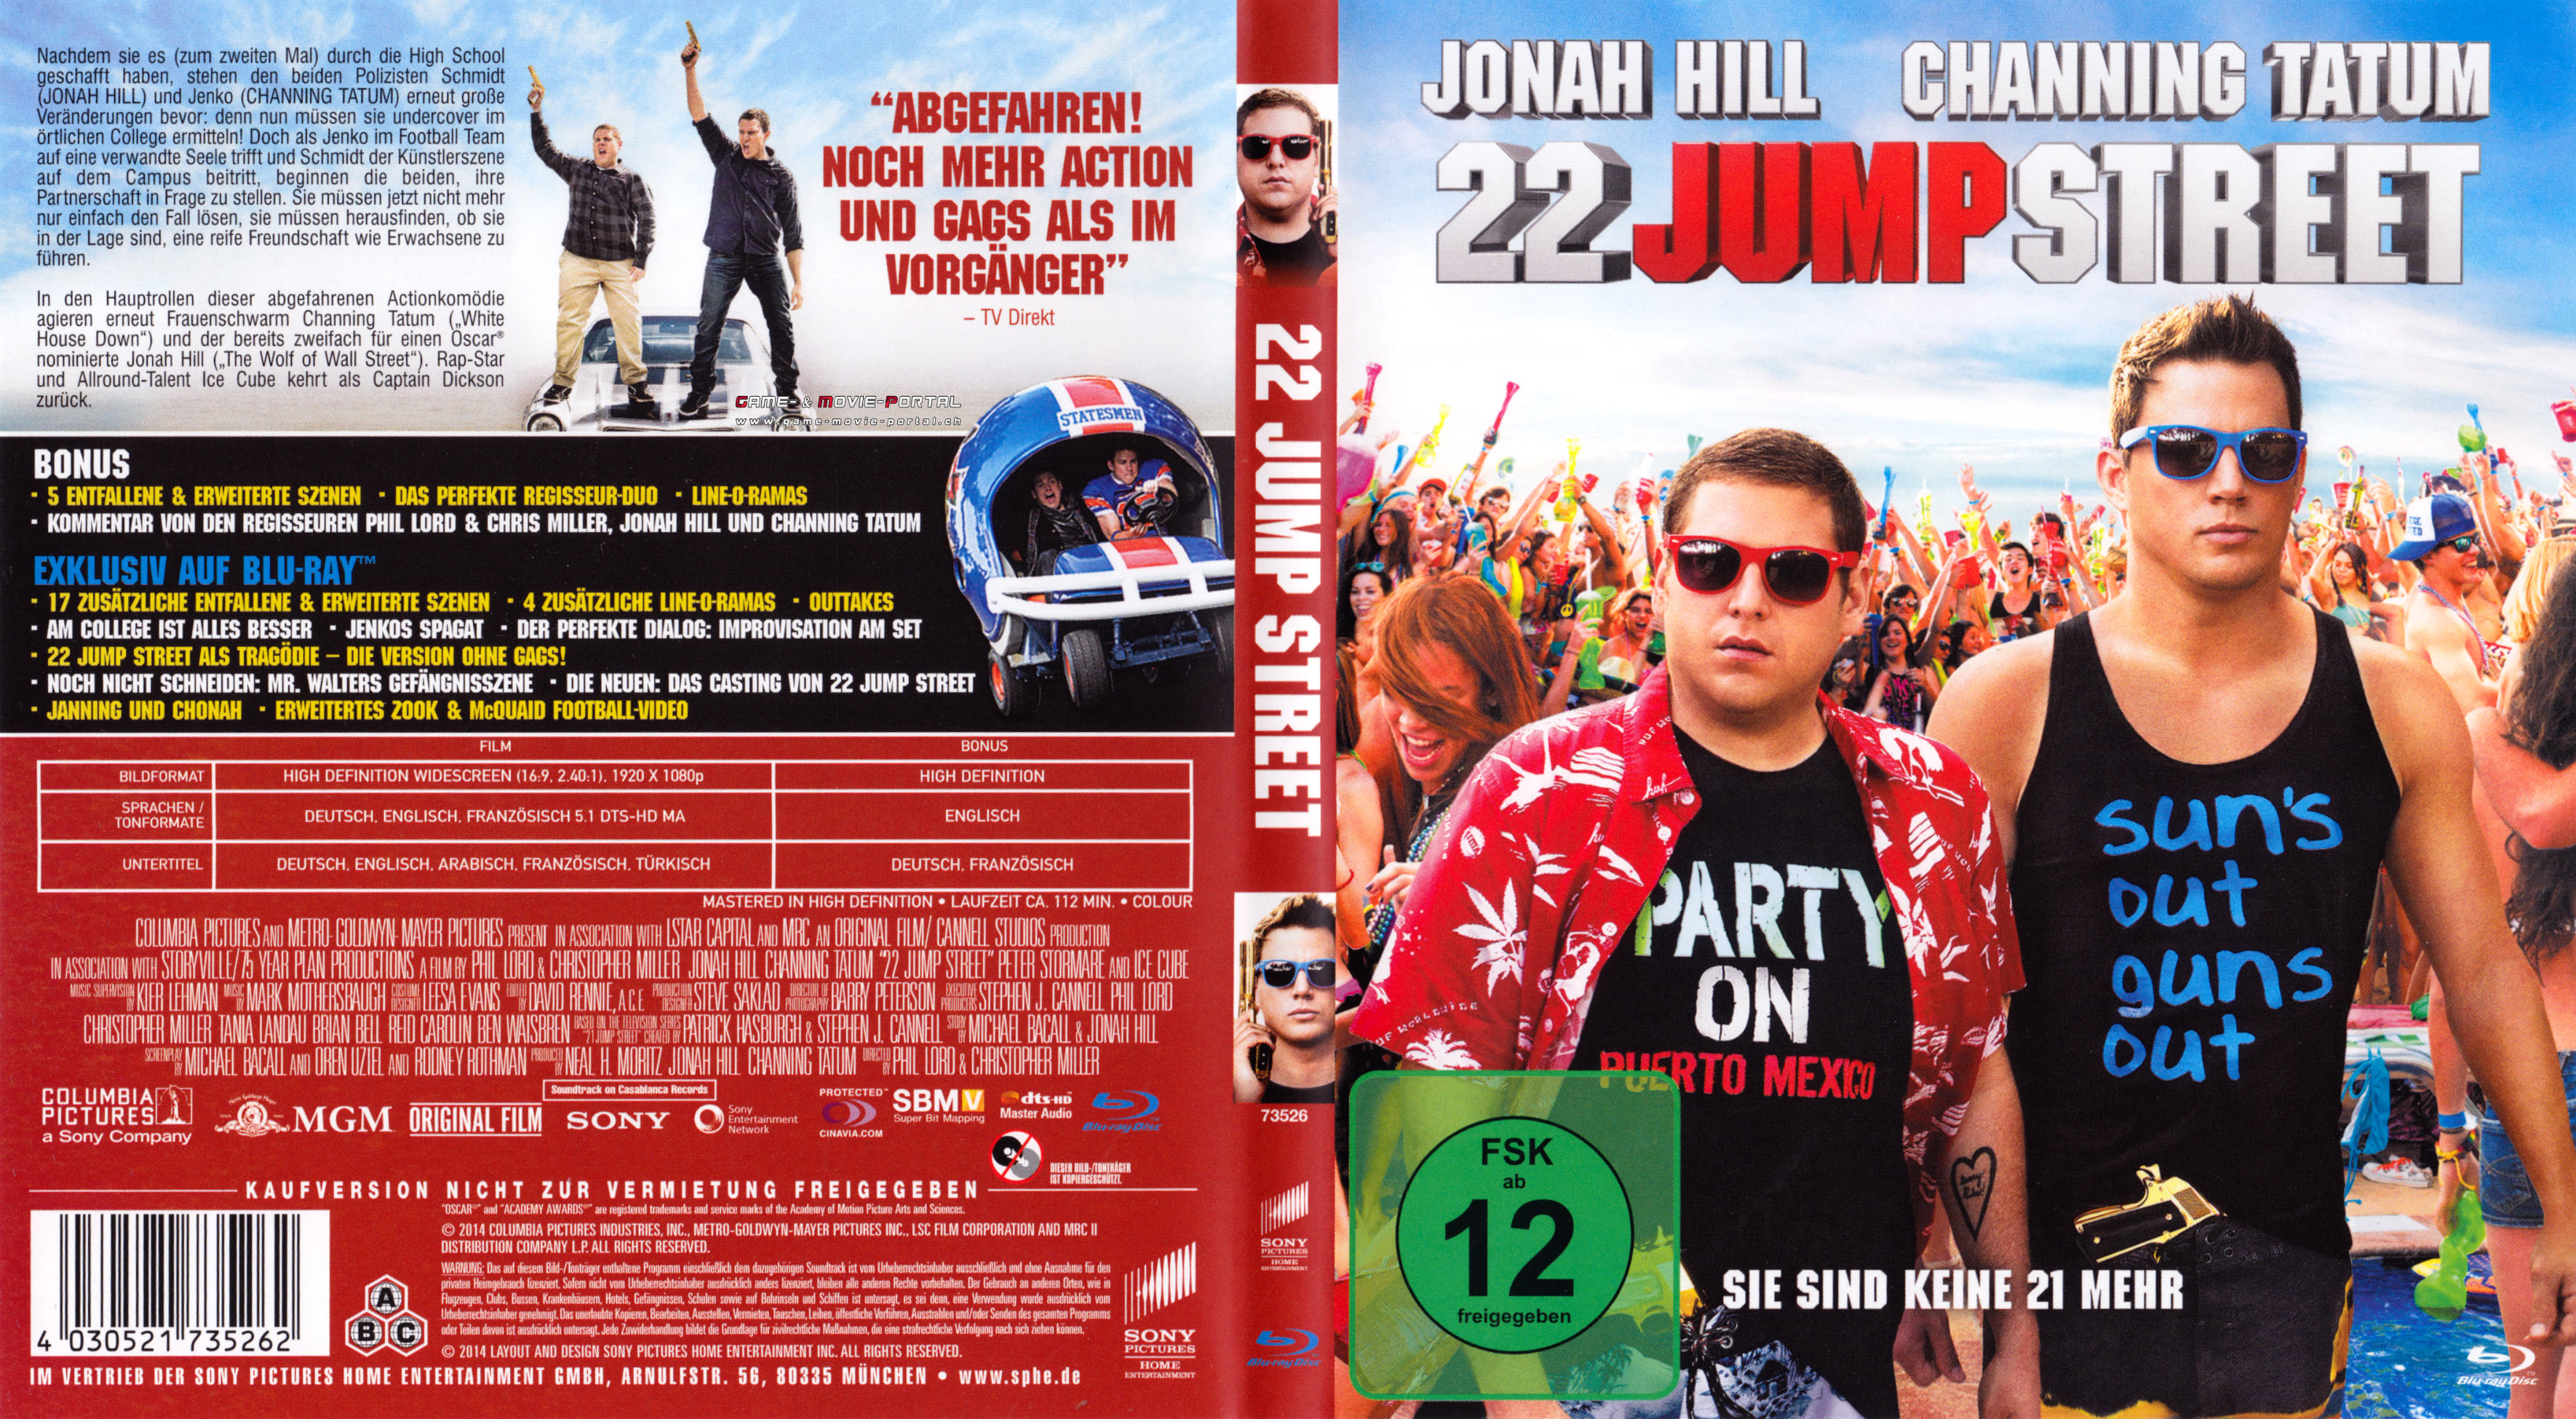 21 jump street full movie with english subtitles